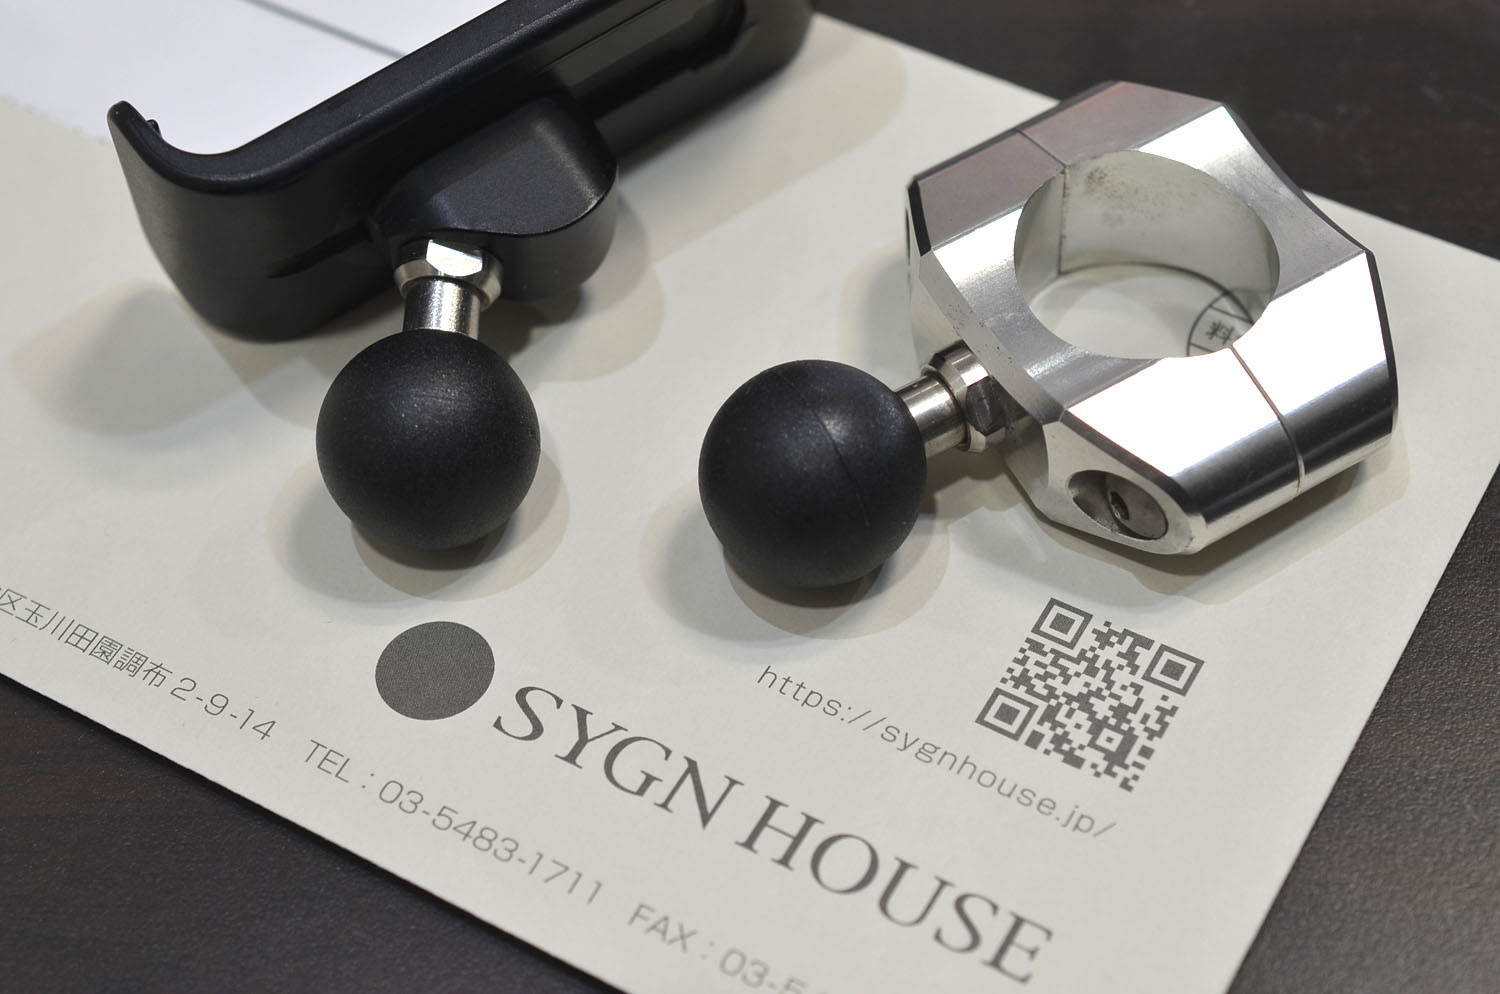 SYGN HOUSE MOUNT SYSTEM サインハウス マウントシステム ボール交換